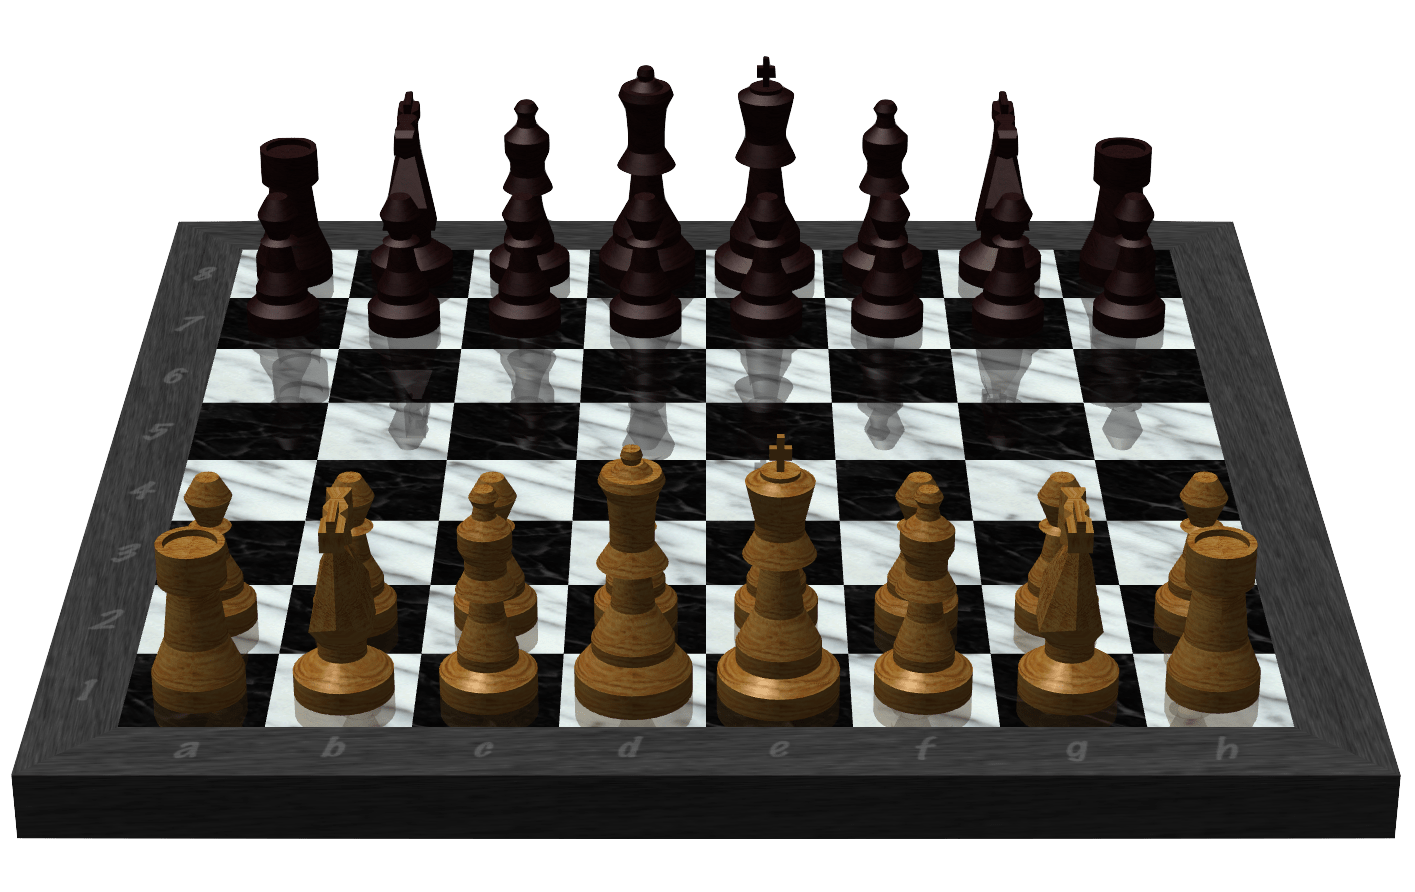 Как стоят шахматы на шахматной доске фото